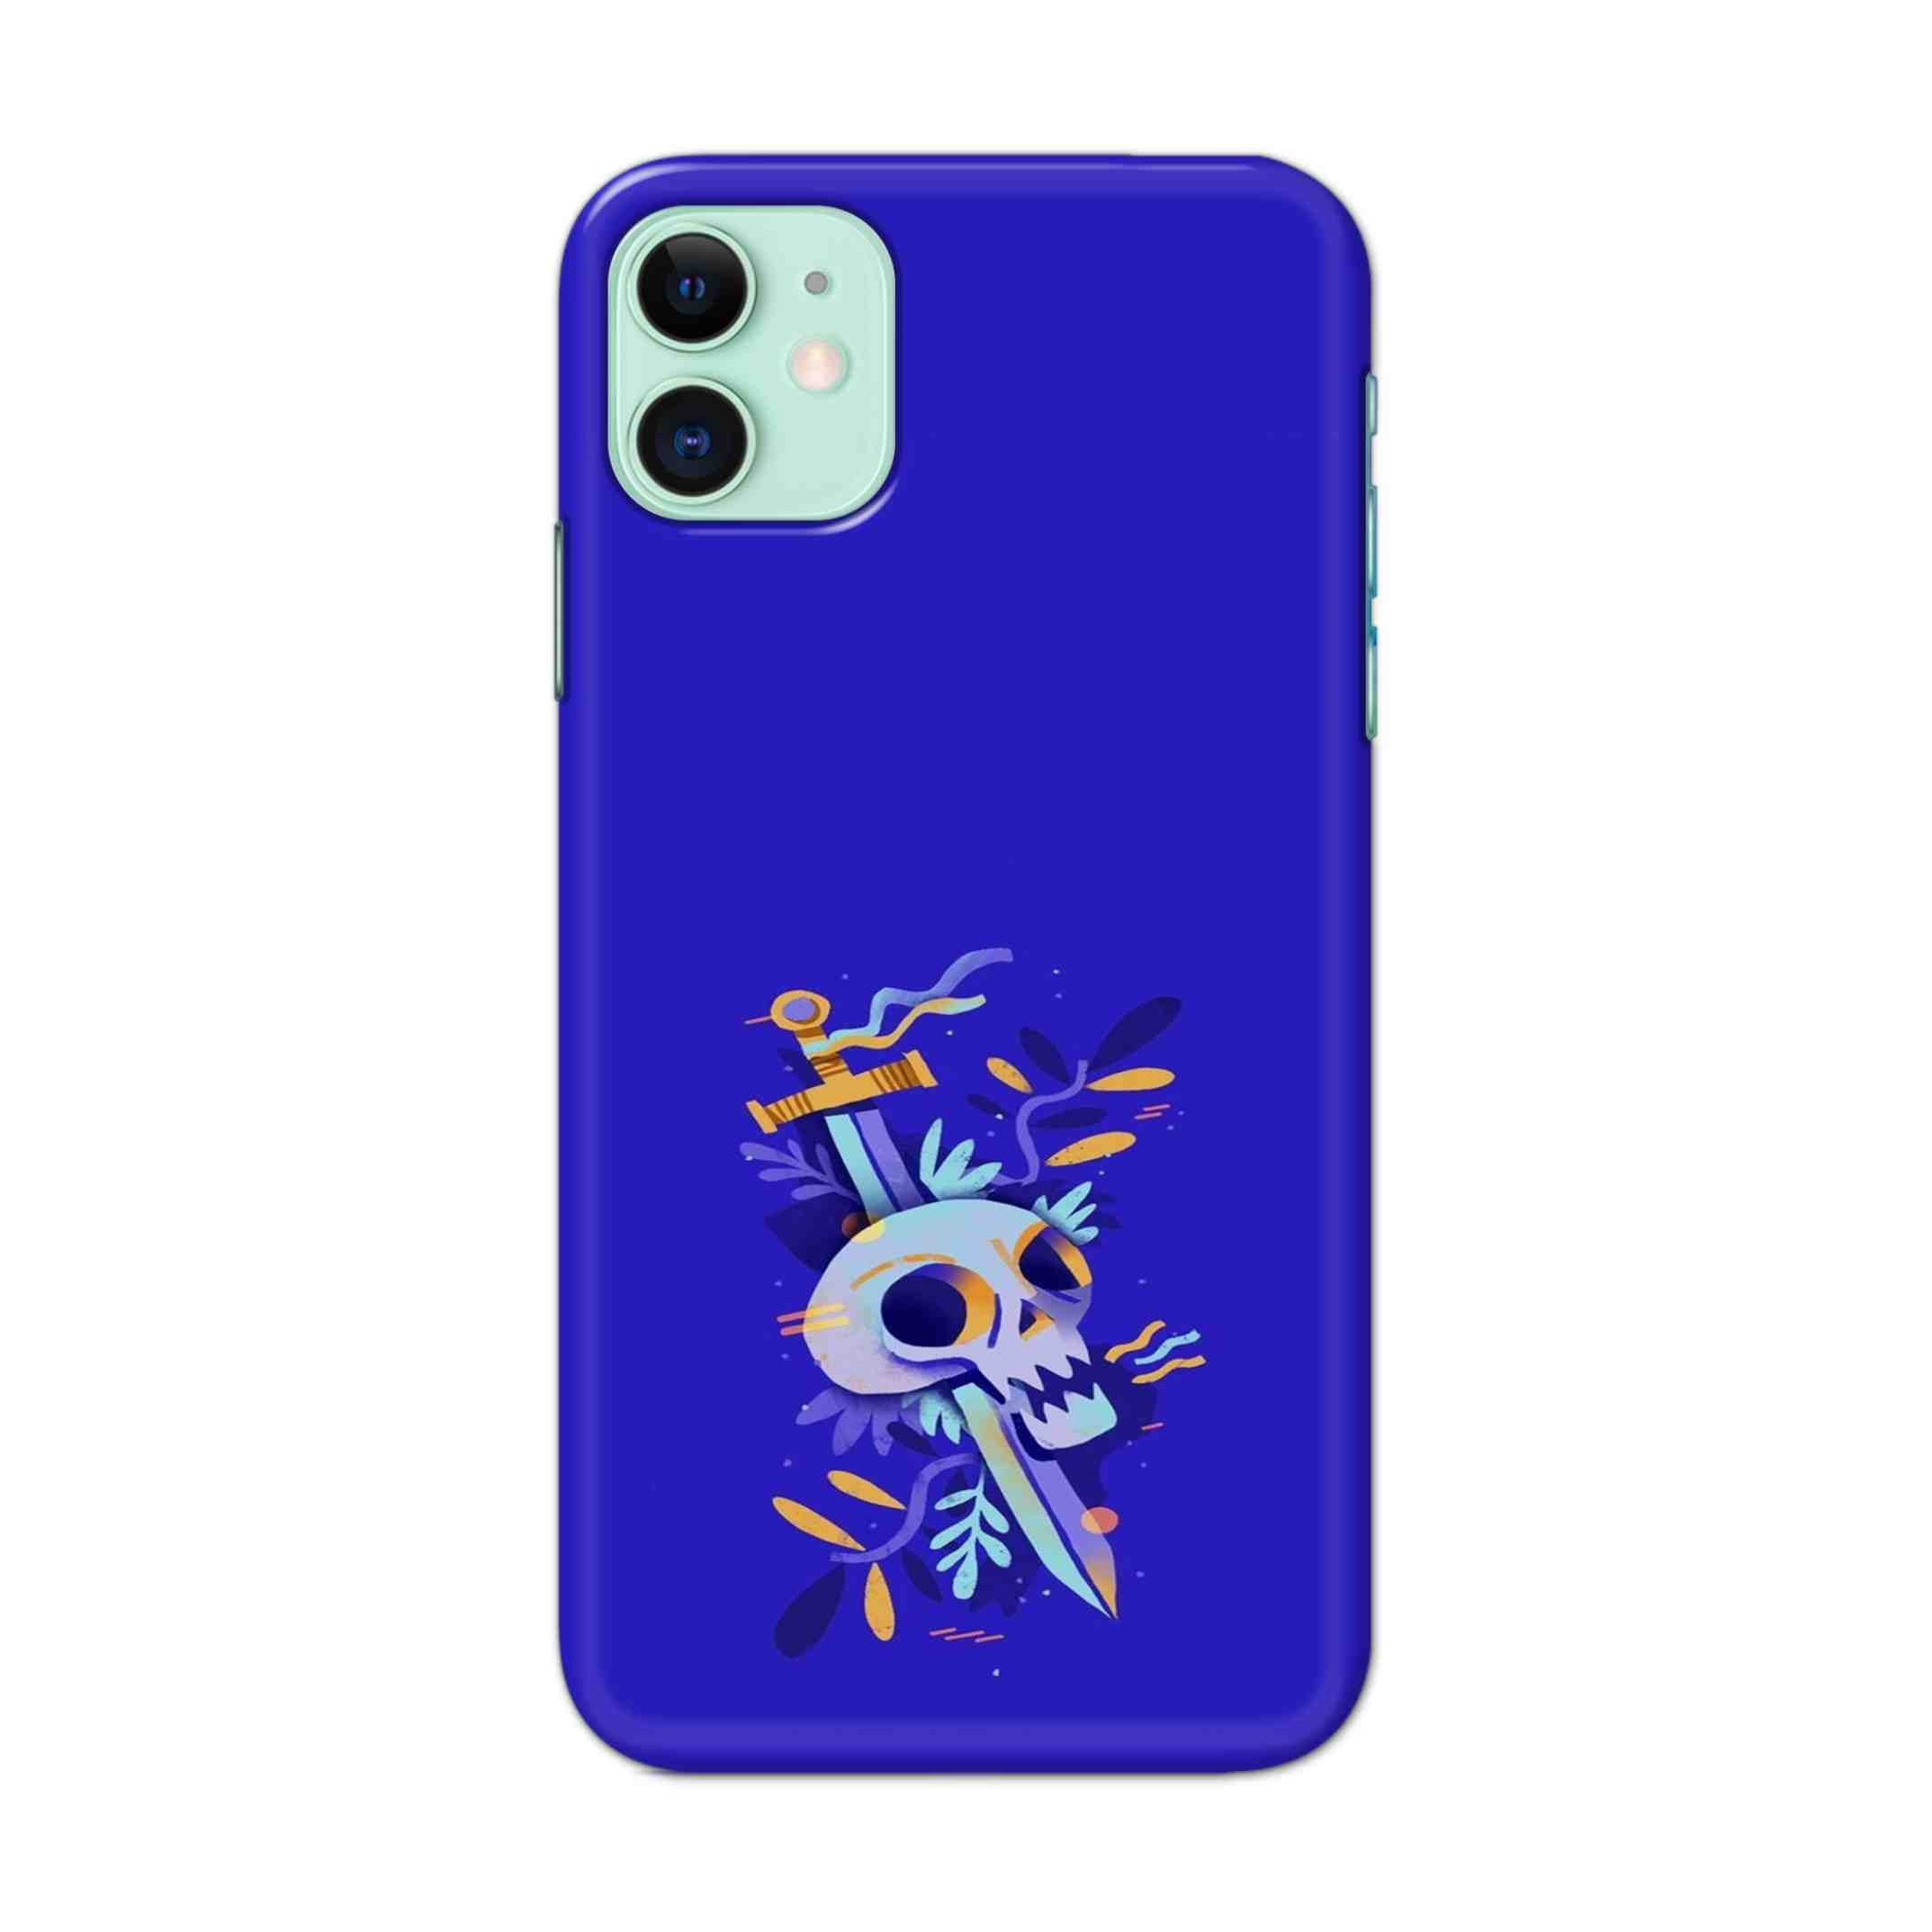 Buy Blue Skull Hard Back Mobile Phone Case/Cover For iPhone 11 Online